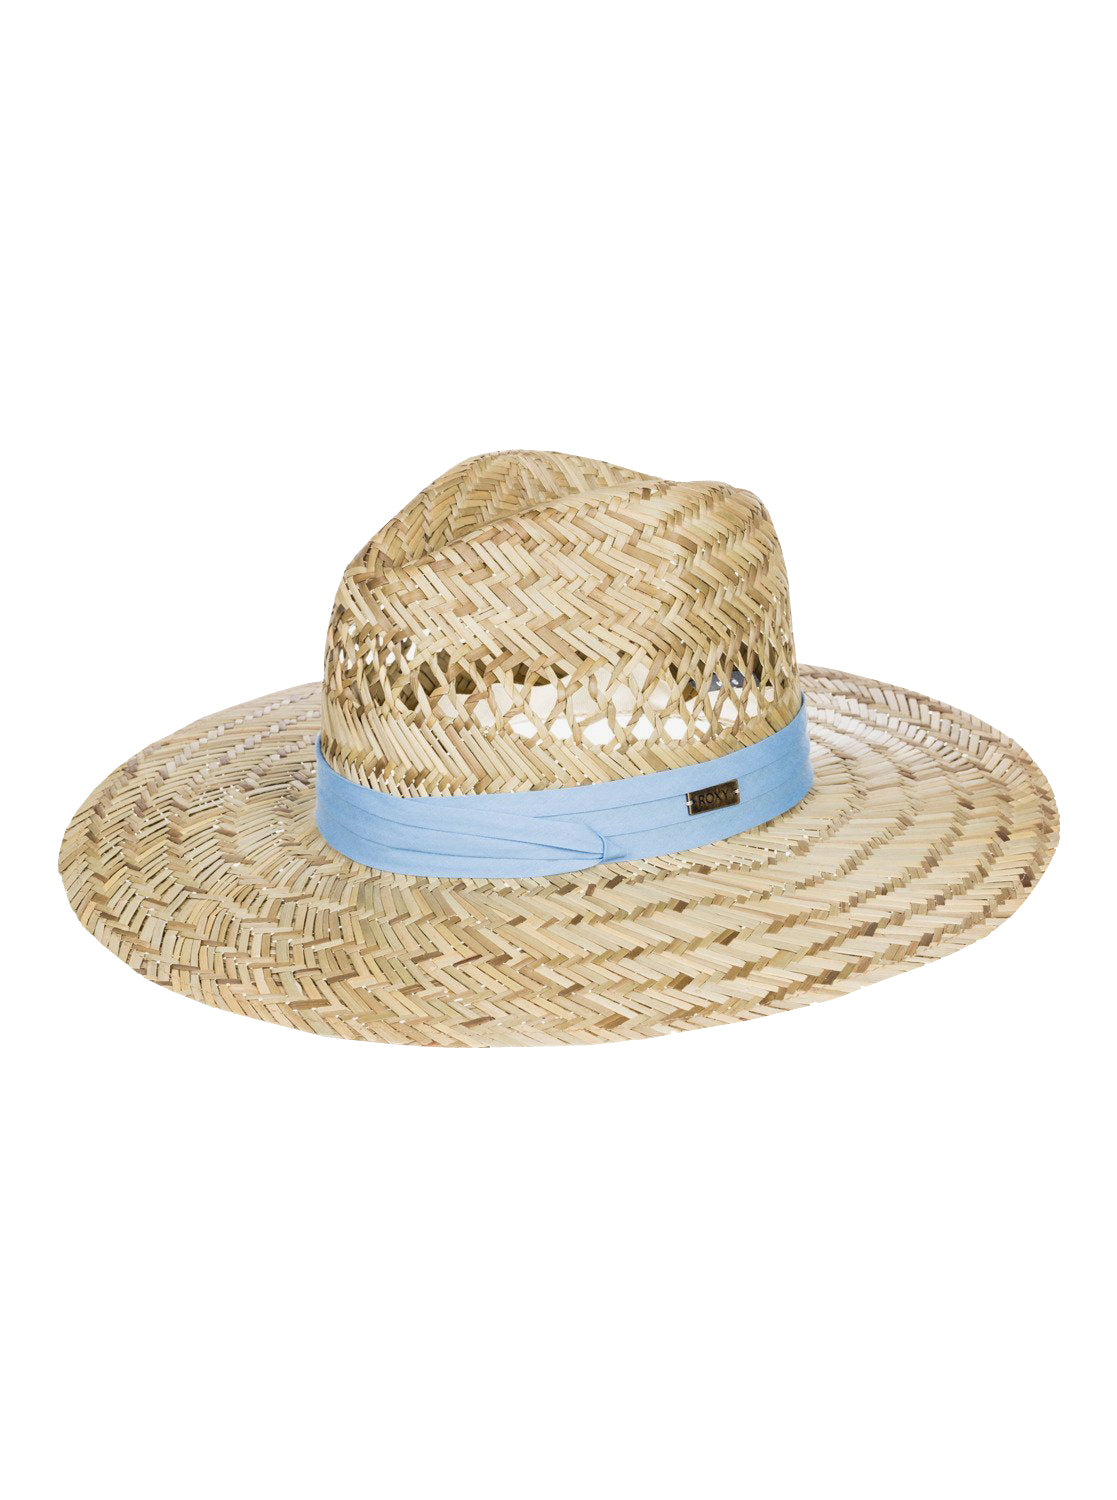 Roxy Crashing Waves Straw Sun Hat